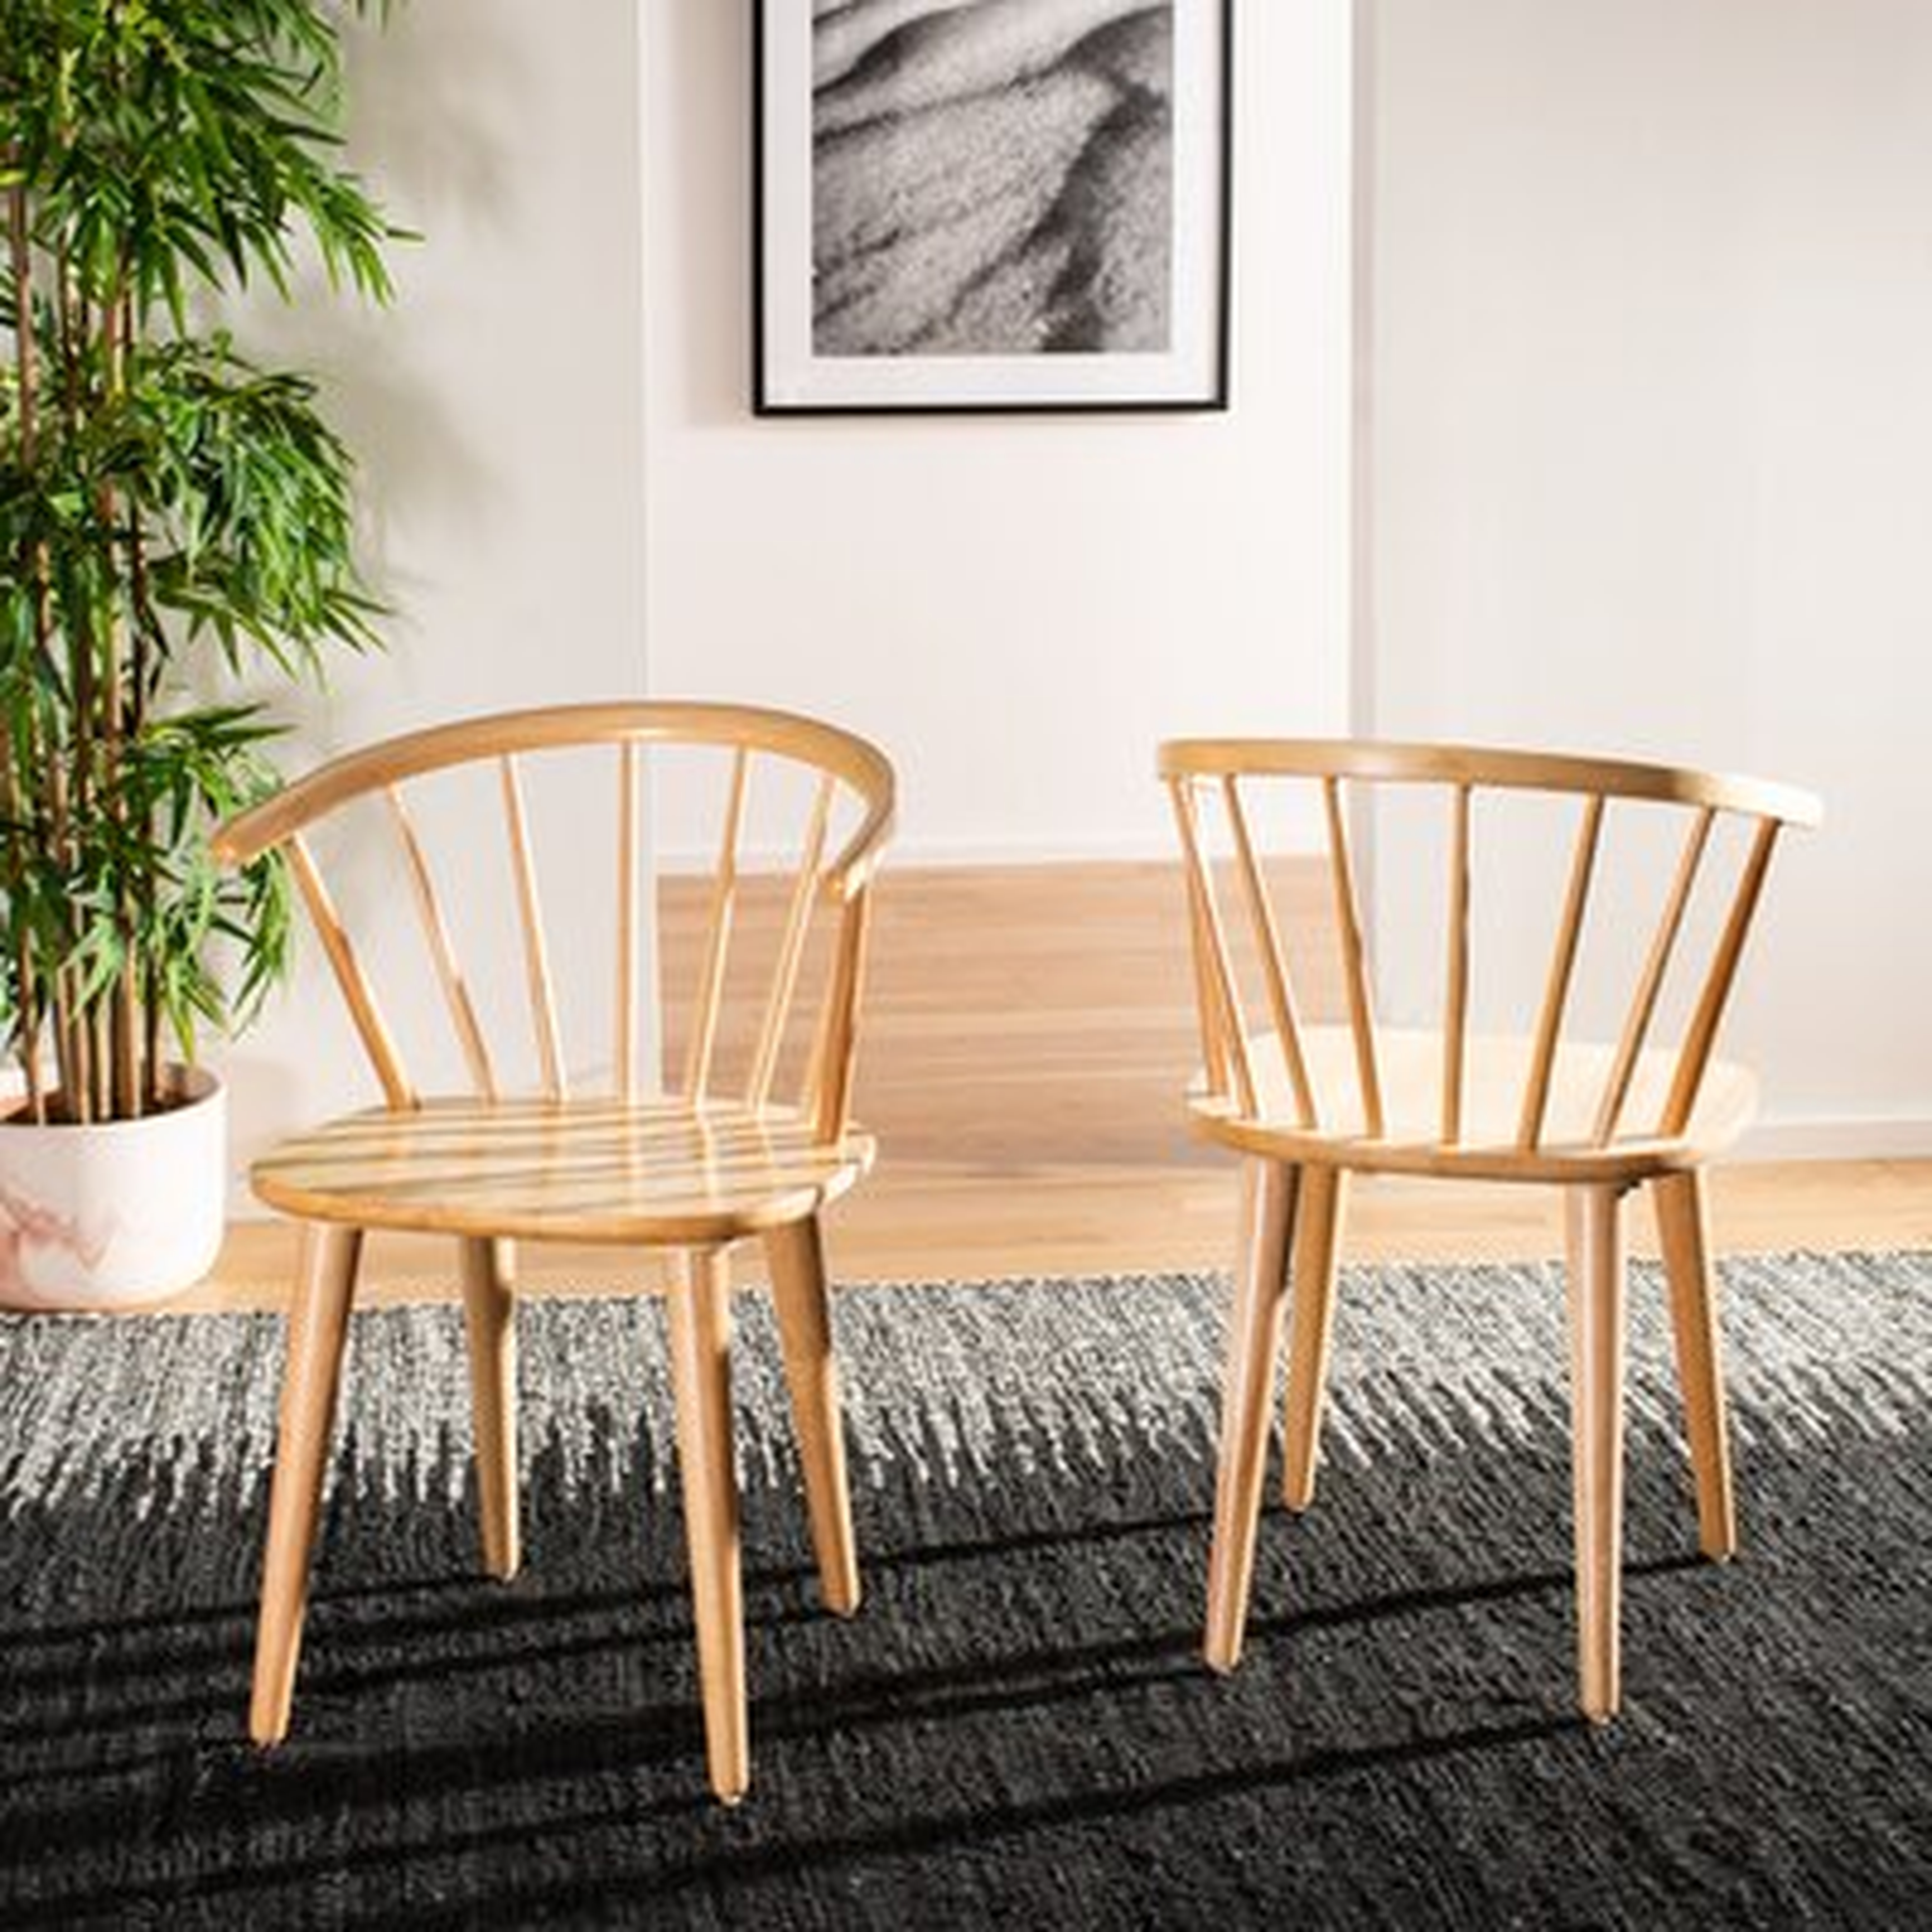 Spindle Solid Wood Windsor Back Arm Chair (set of 2) - Wayfair